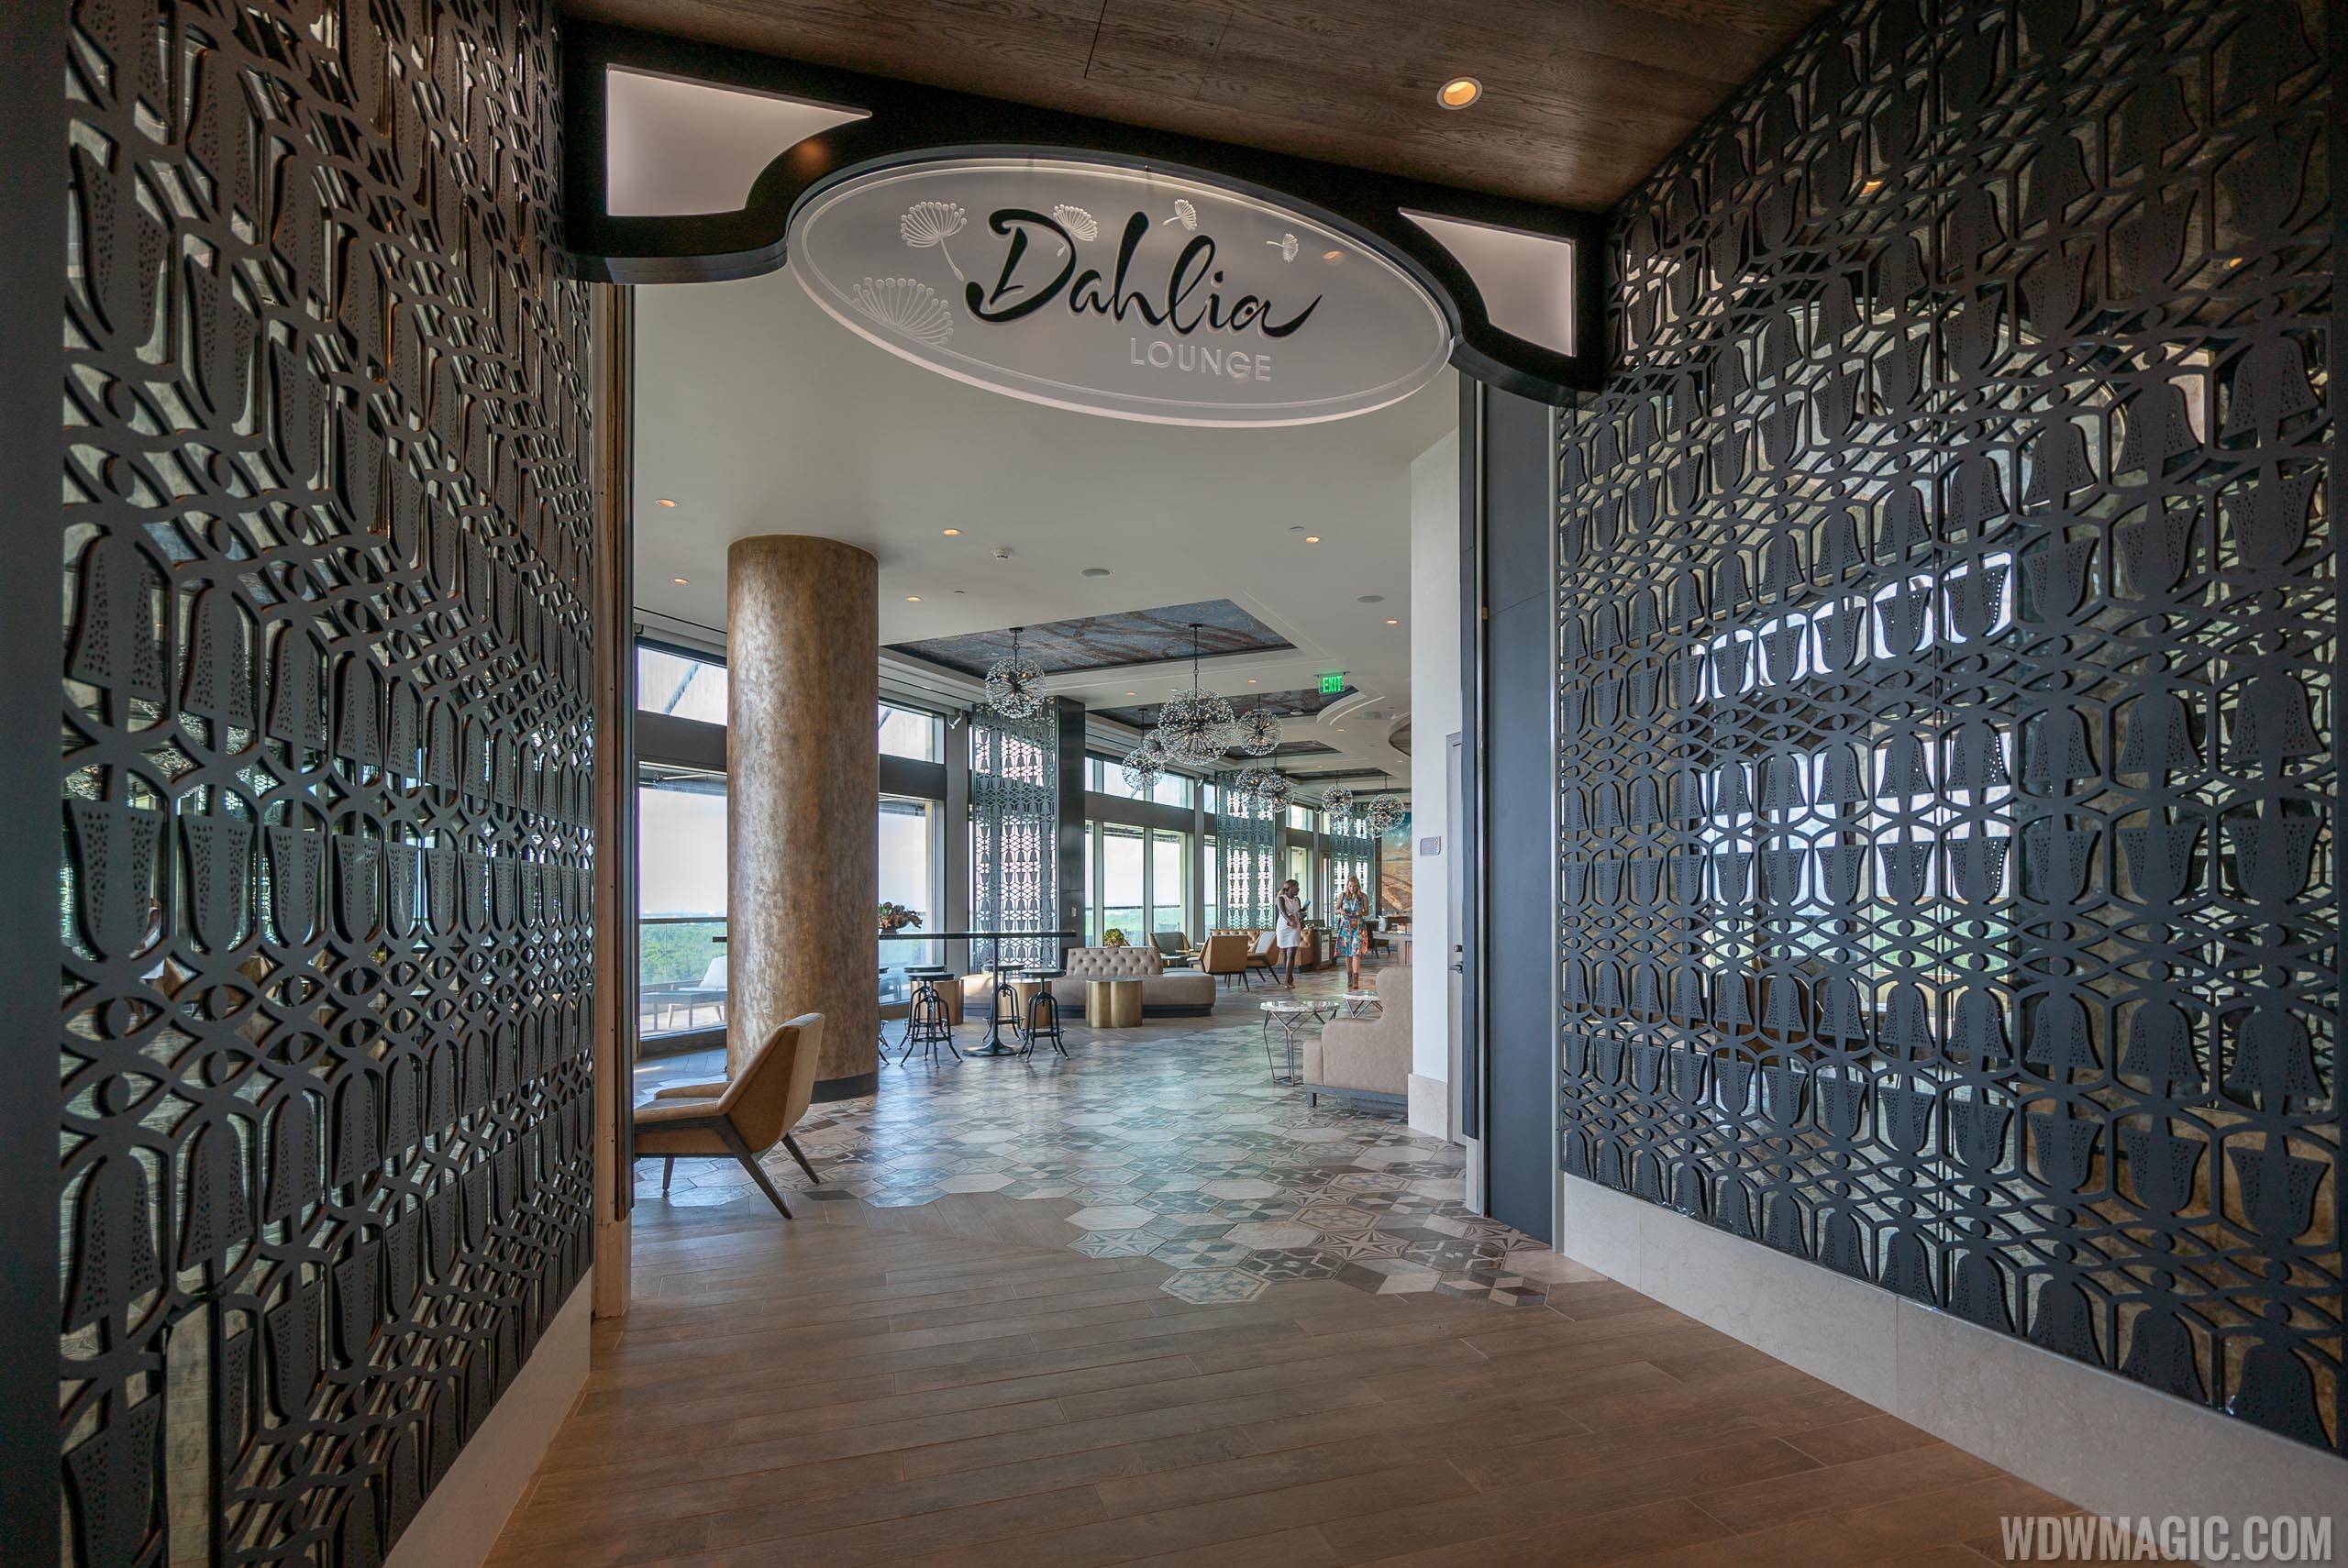 Dahlia Lounge overview